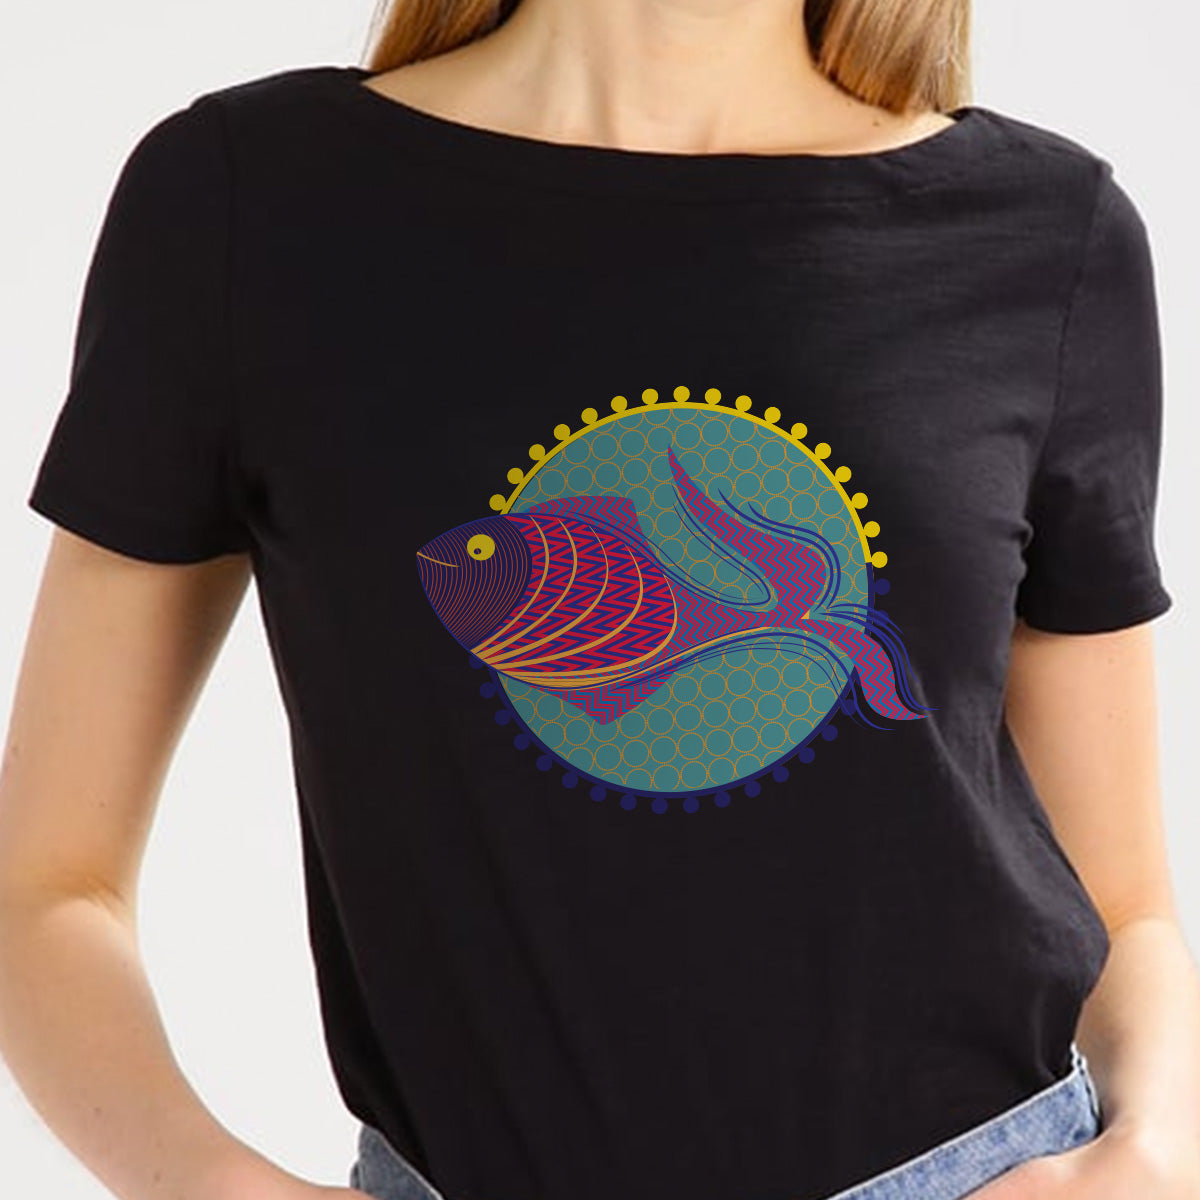 The Pretty Fish Black T- Shirt